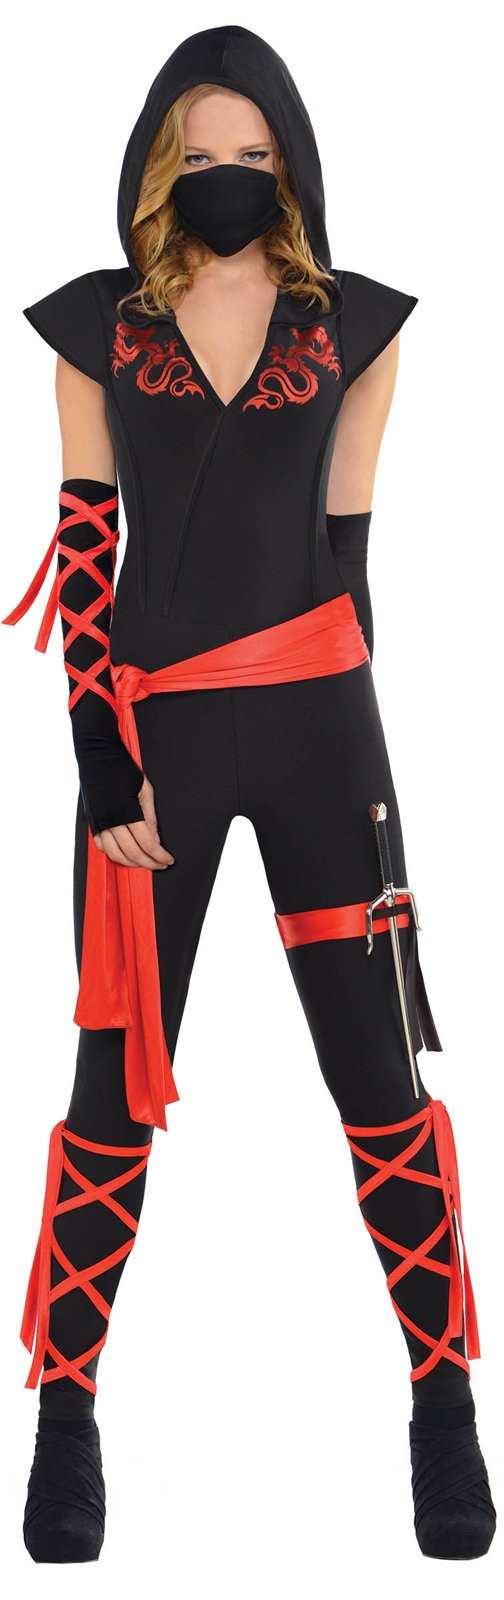 Female Ninja Costume DIY
 Womens Dragon Fighter Ninja Costume from CostumeExpress